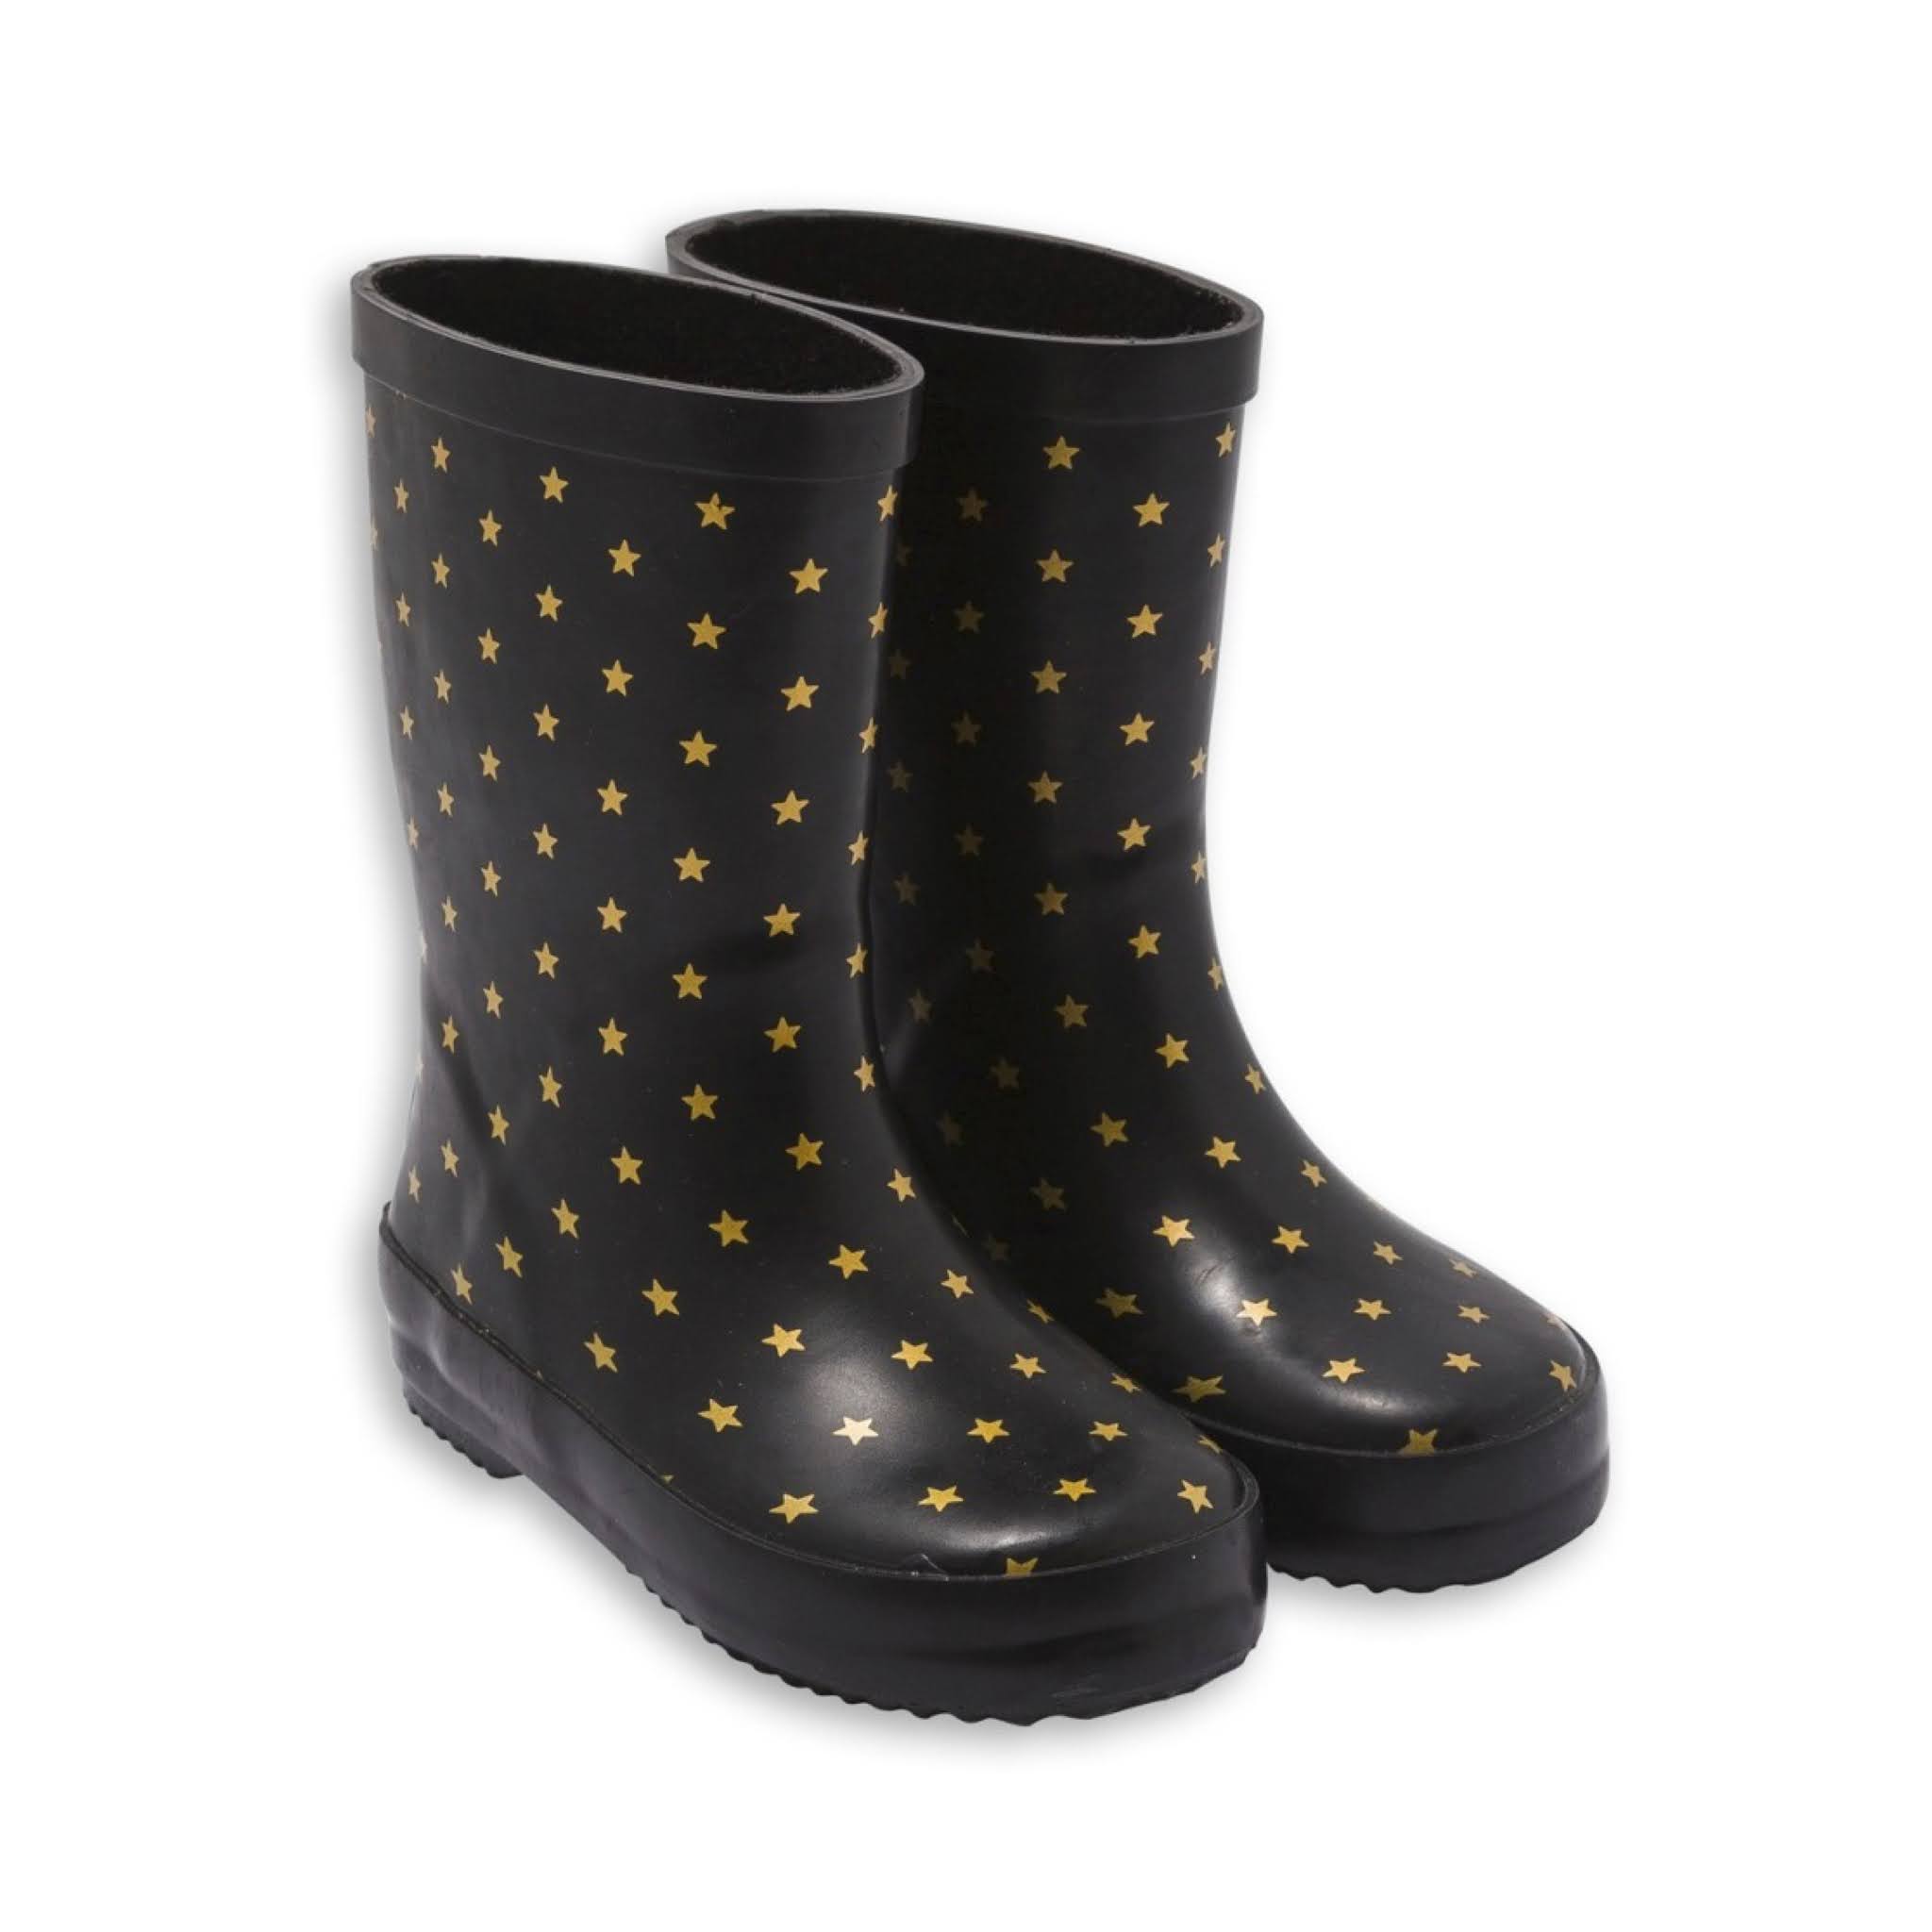 Kids Star Patterned Rain Boots from Bonton